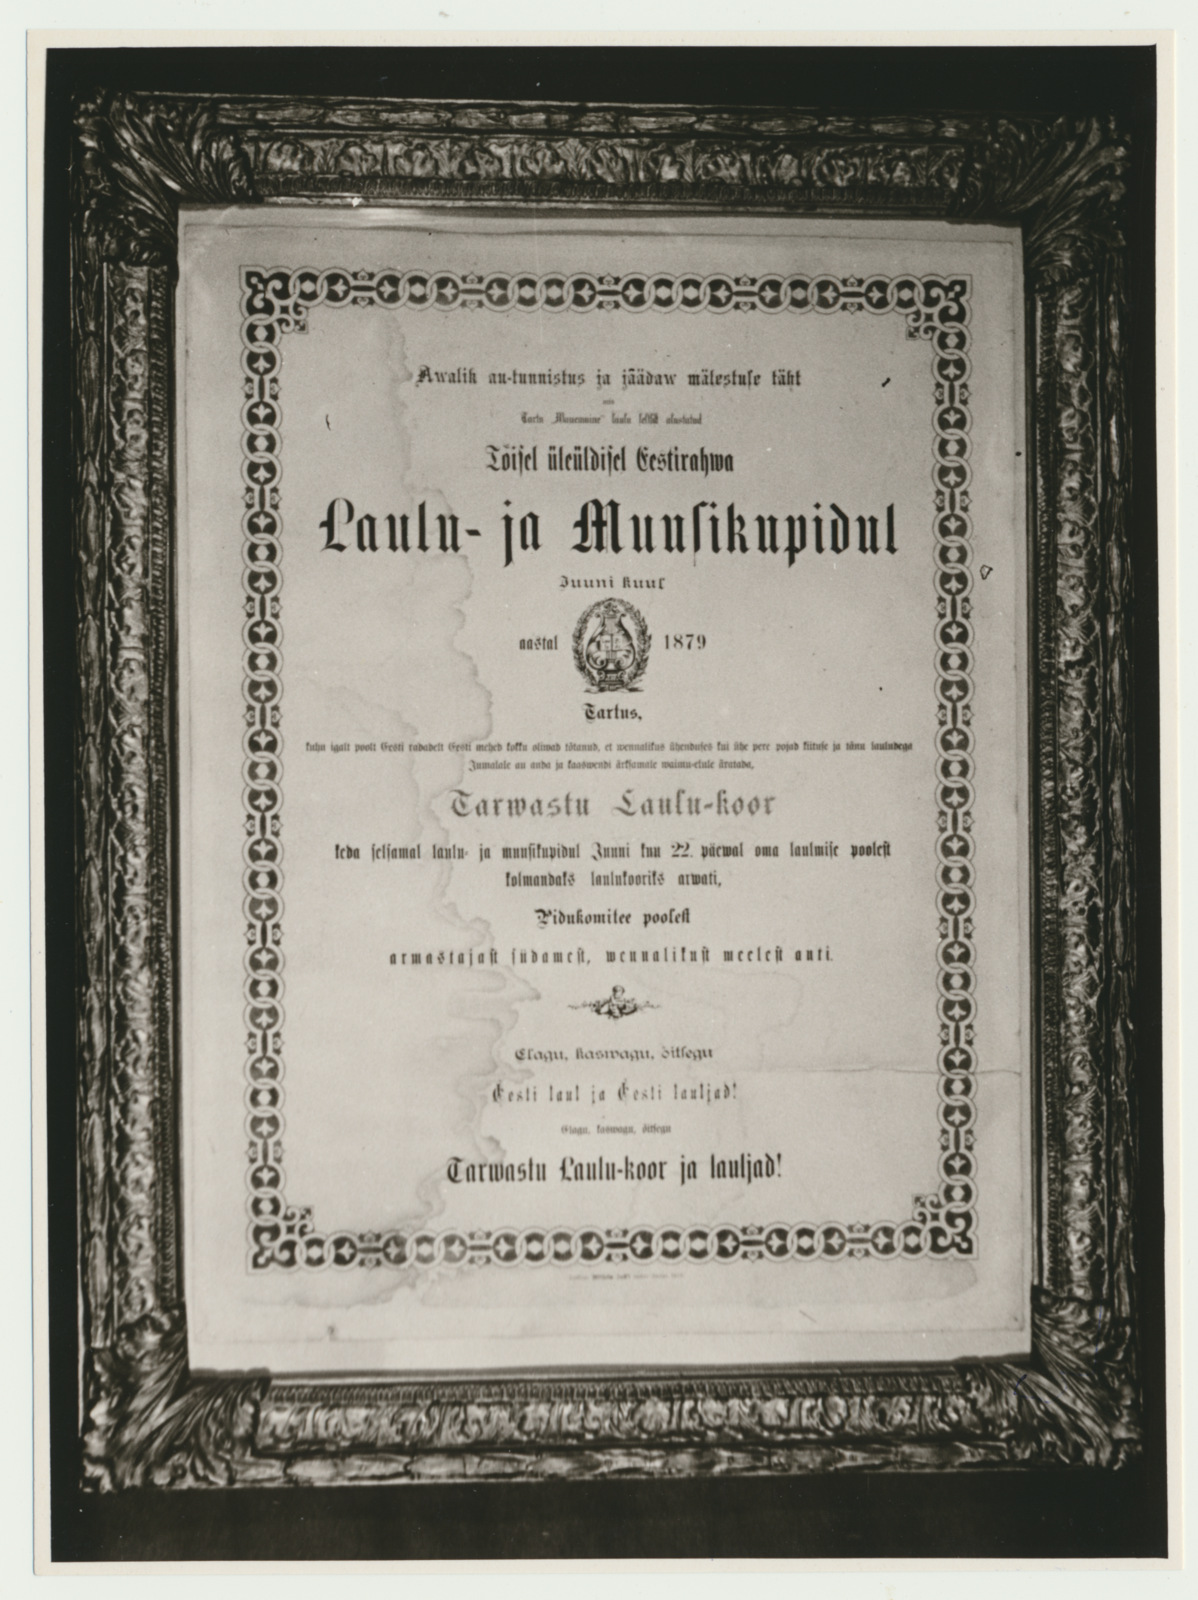 fotokoopia, avalik autunnistus ja jäädav mälestustäht Tarvastu koorile, 1879